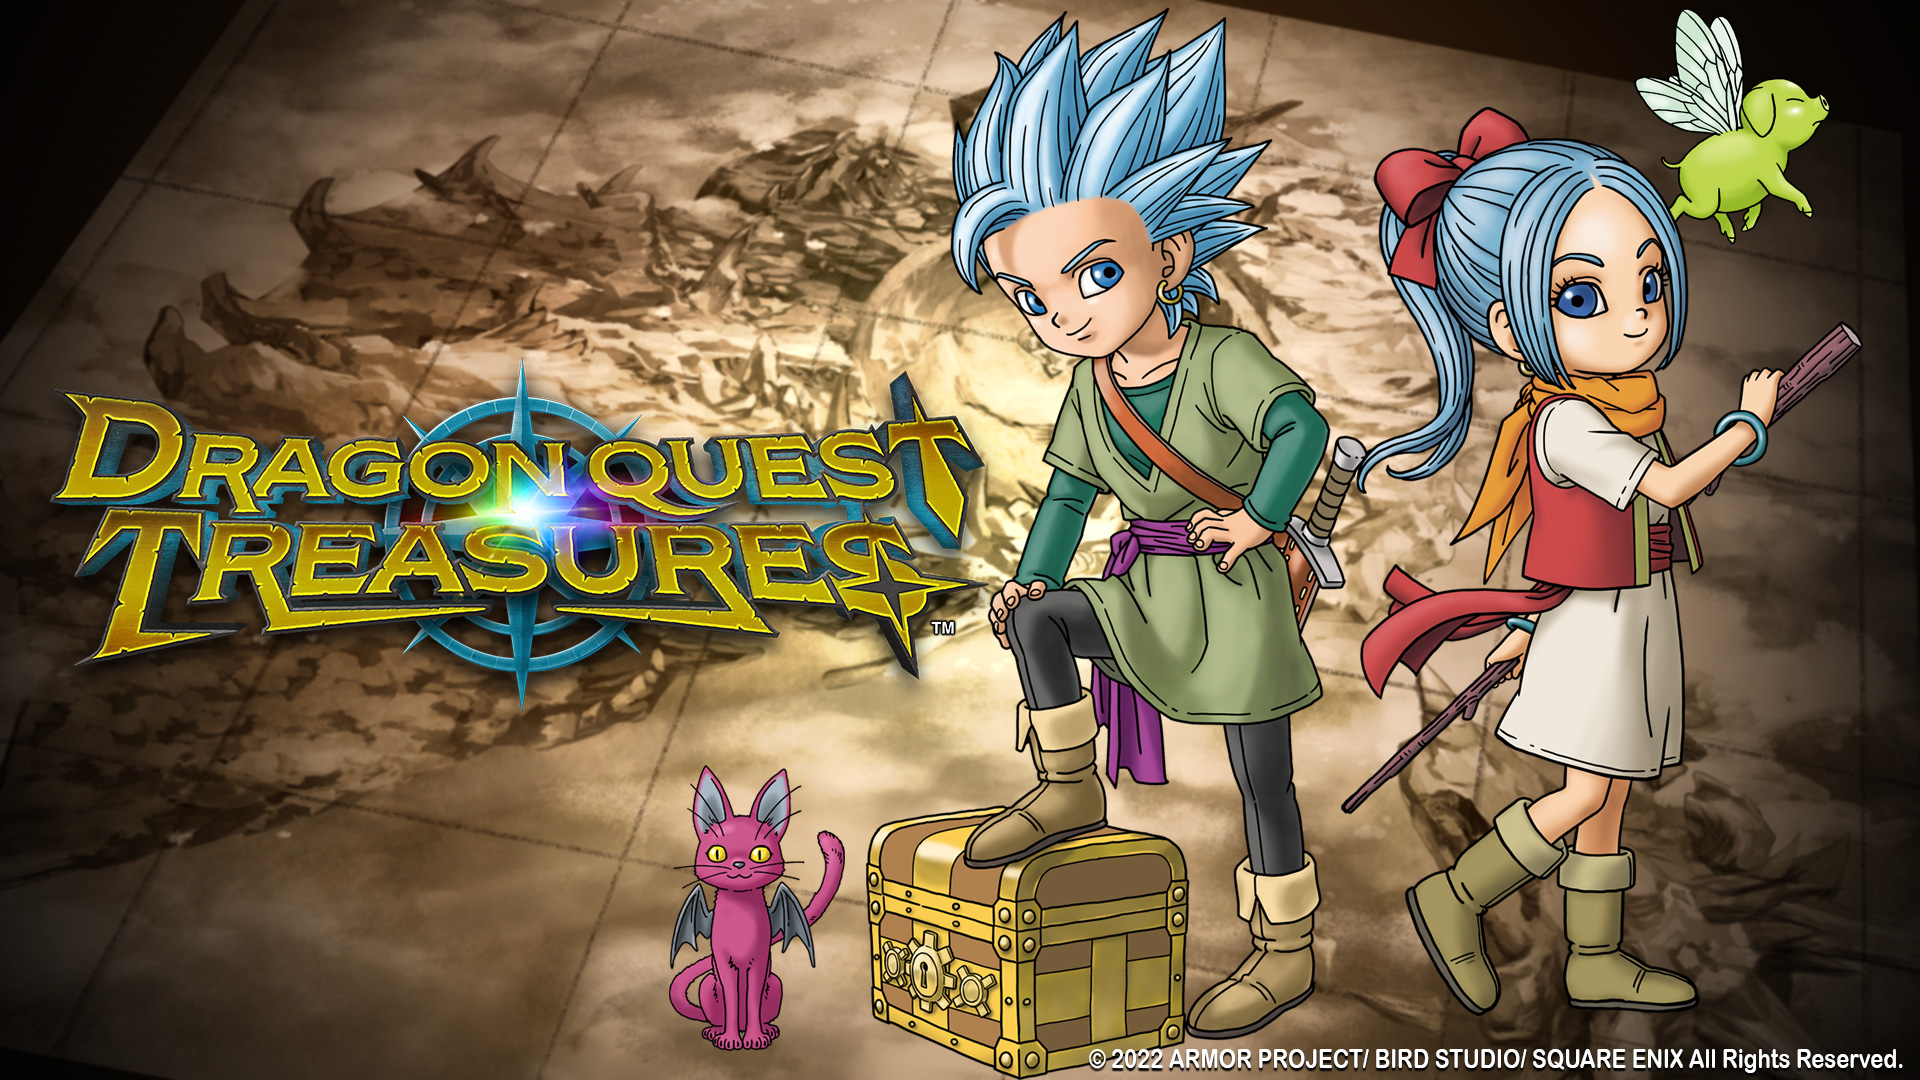 Play the free Dragon Quest Treasures demo on Nintendo eShop